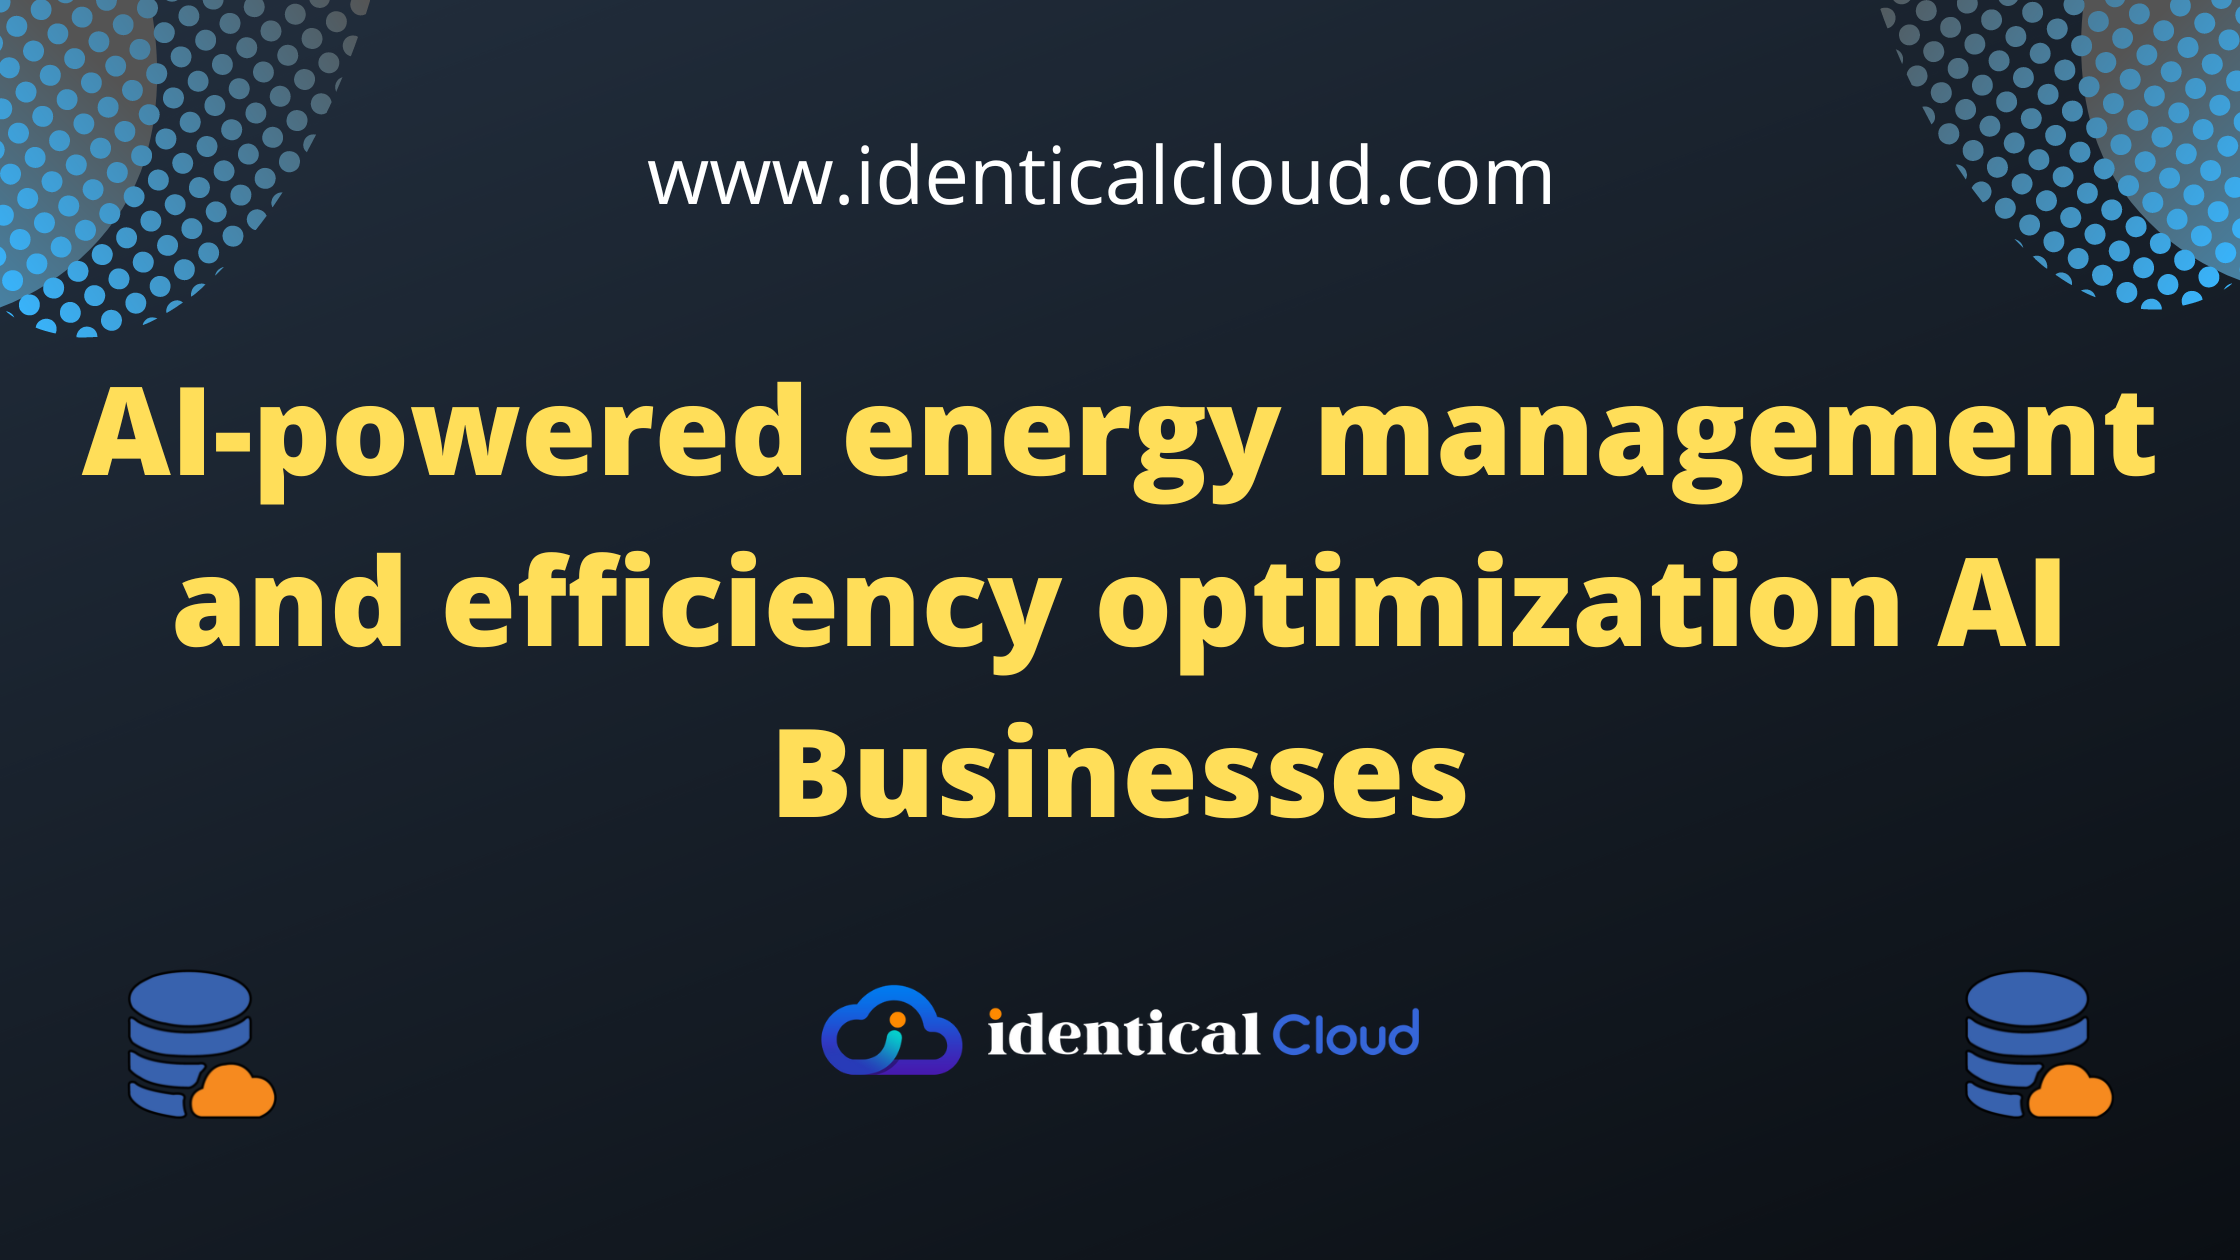 AI-powered energy management and efficiency optimization AI Businesses - identicalcloud.com